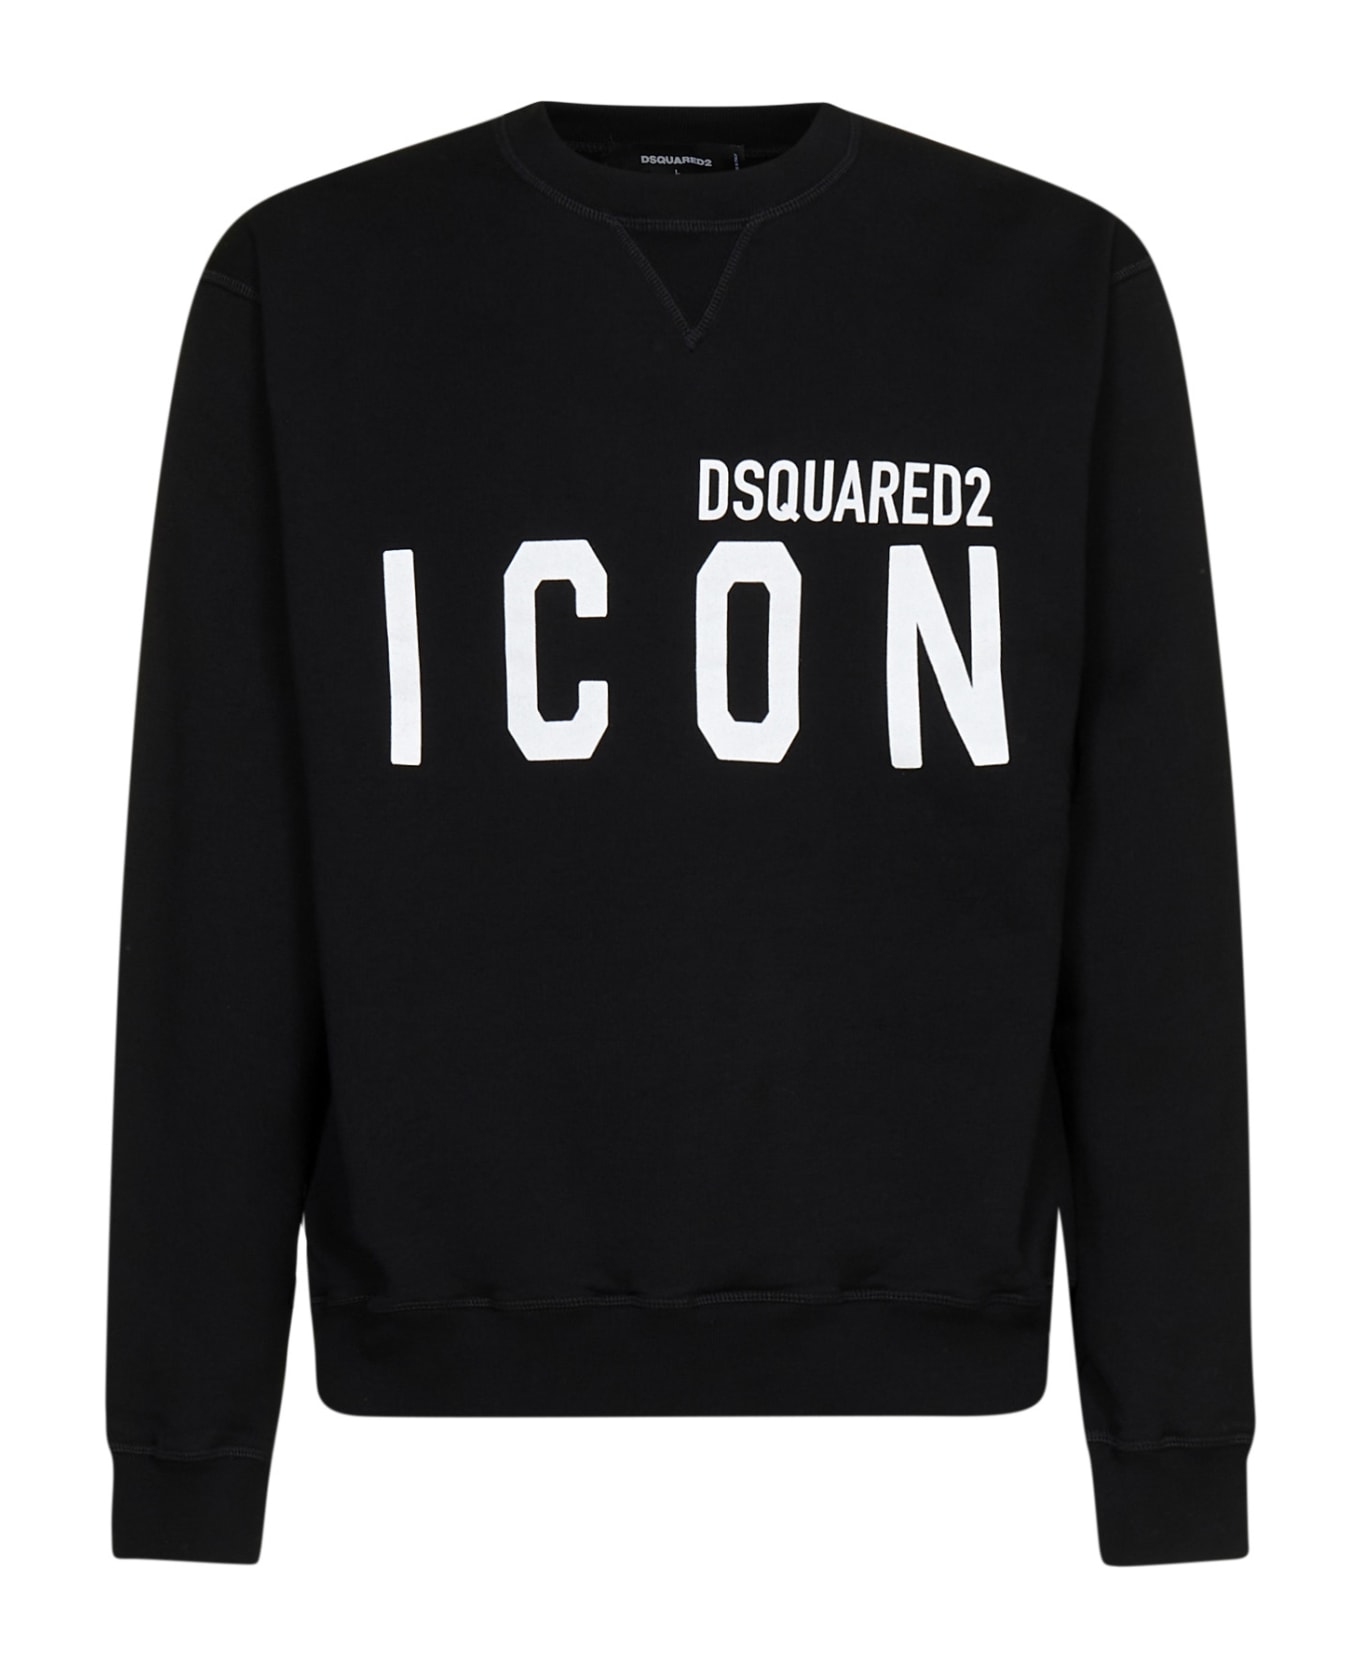 Dsquared2 Icon Crew-neck Sweatshirt - Black/white